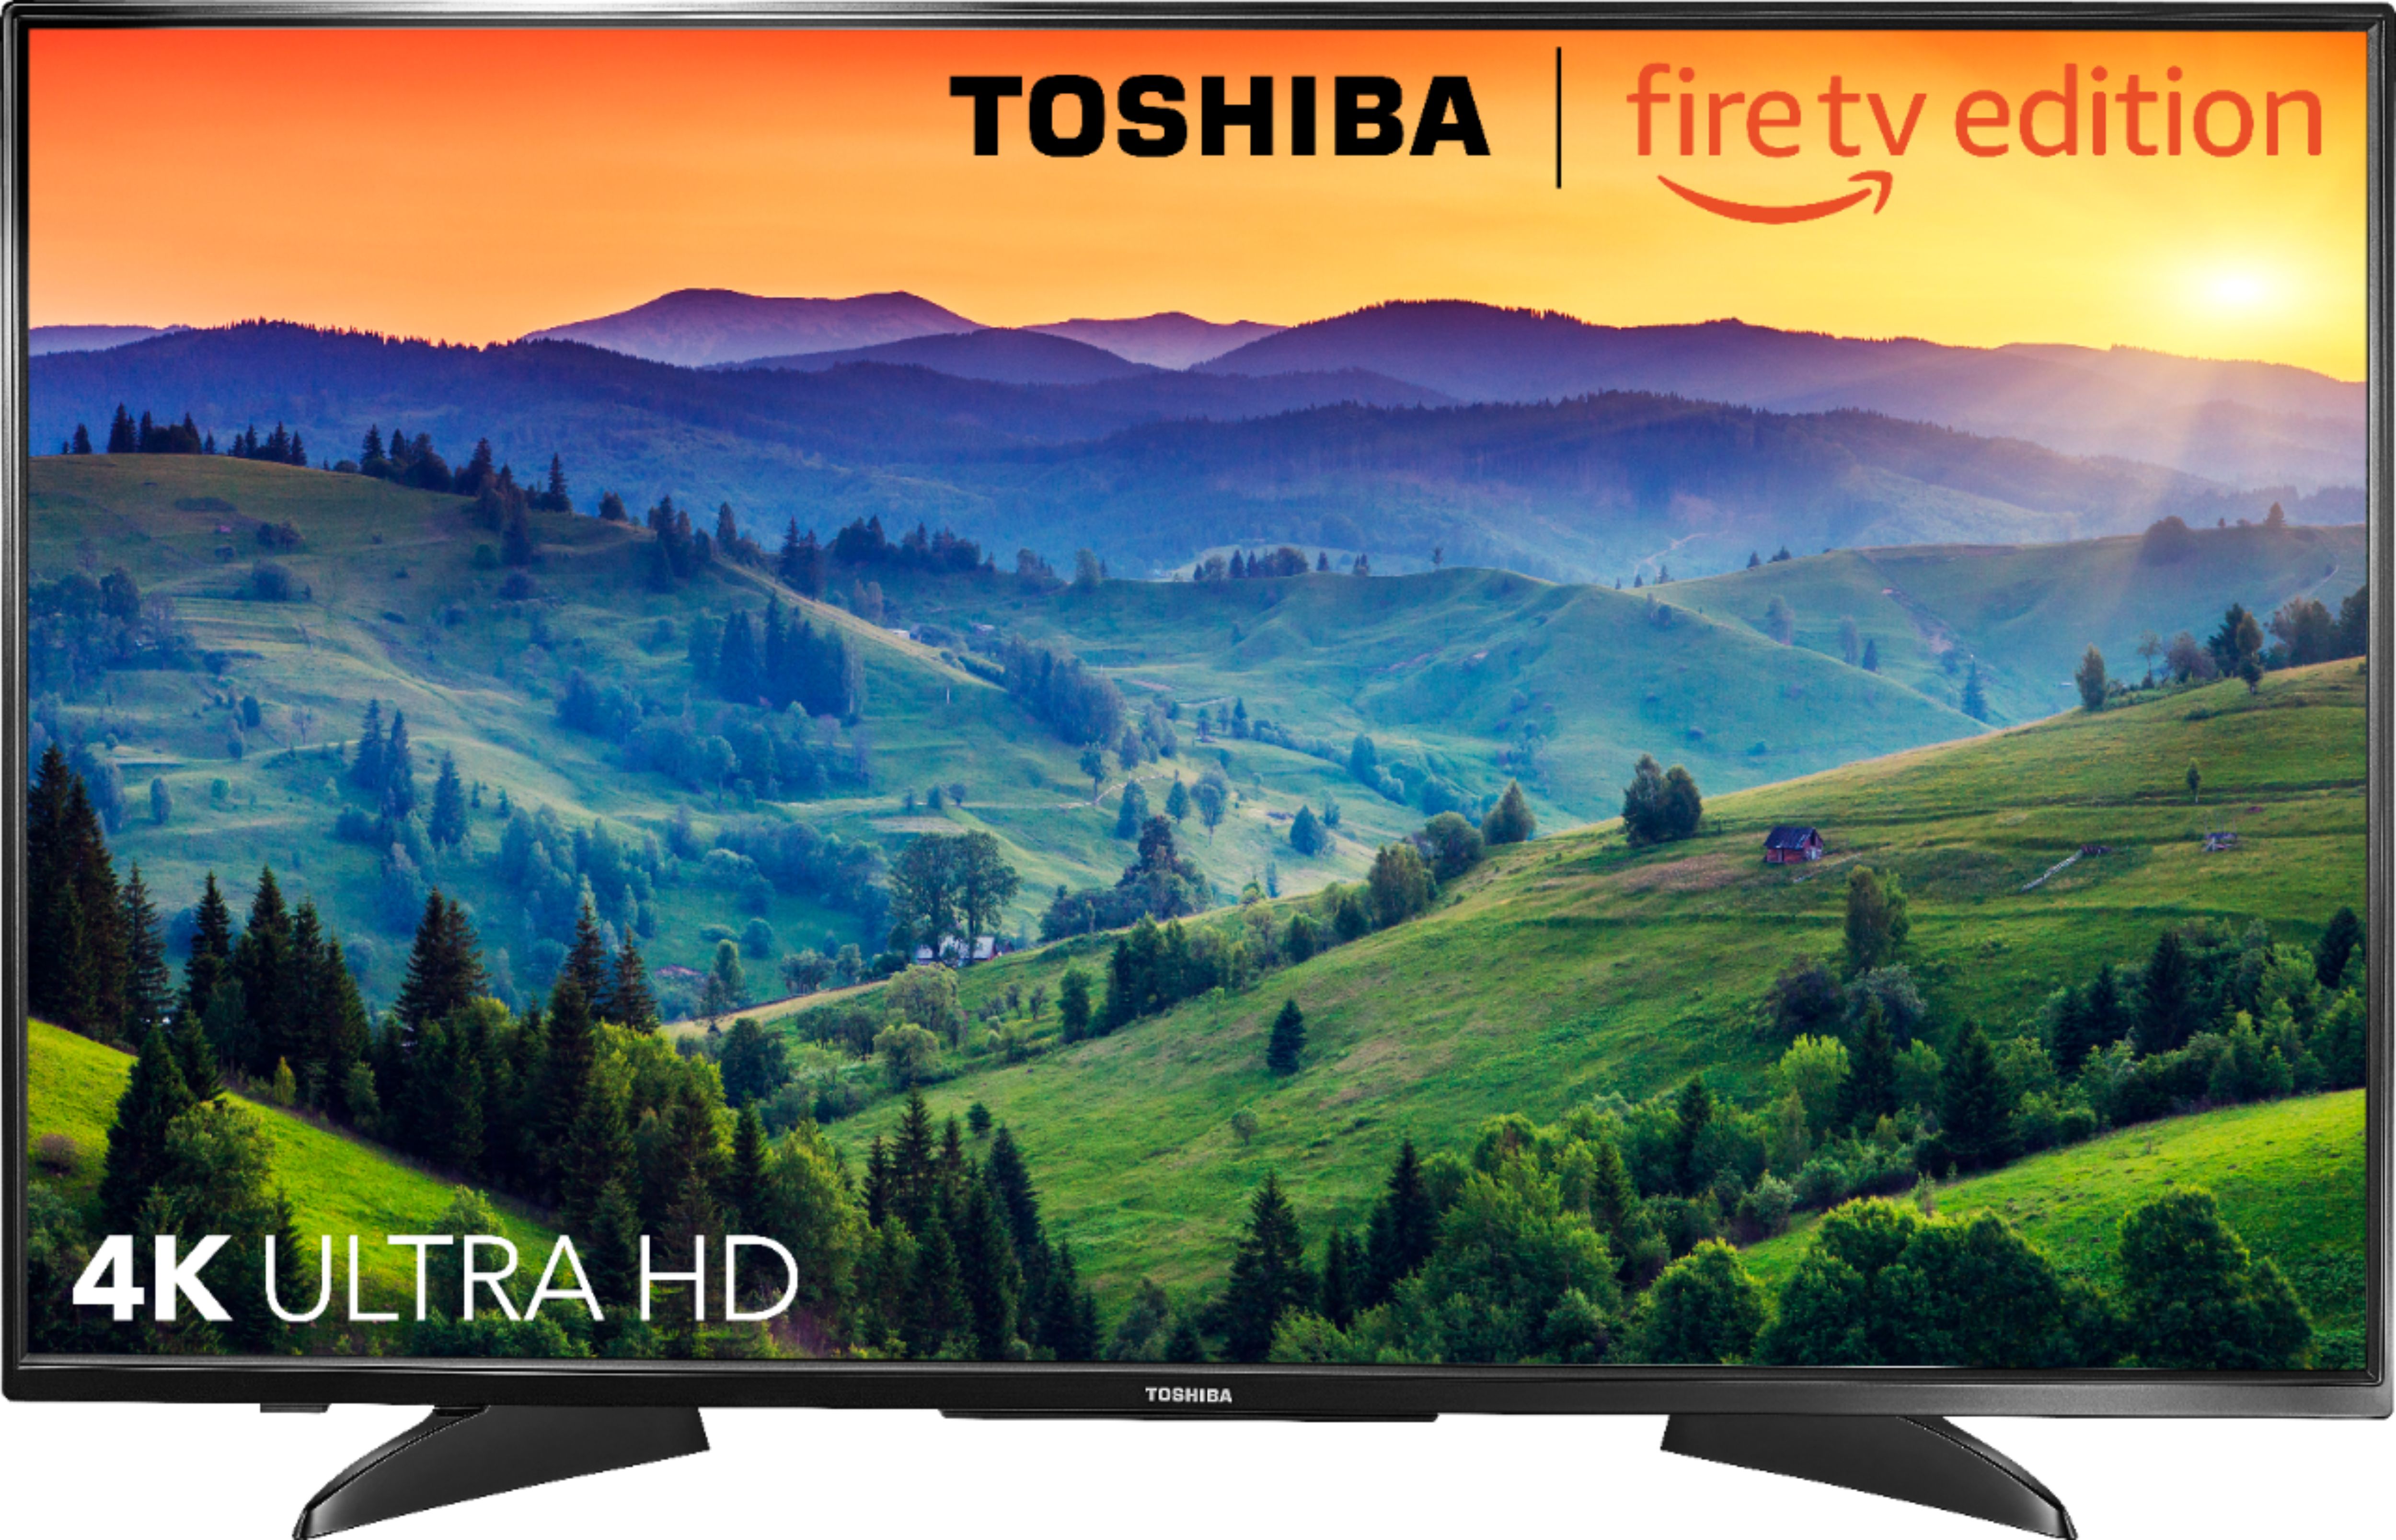 Toshiba 43” Class LED 4K UHD Smart FireTV Edition TV 43LF621U19 - Best Buy